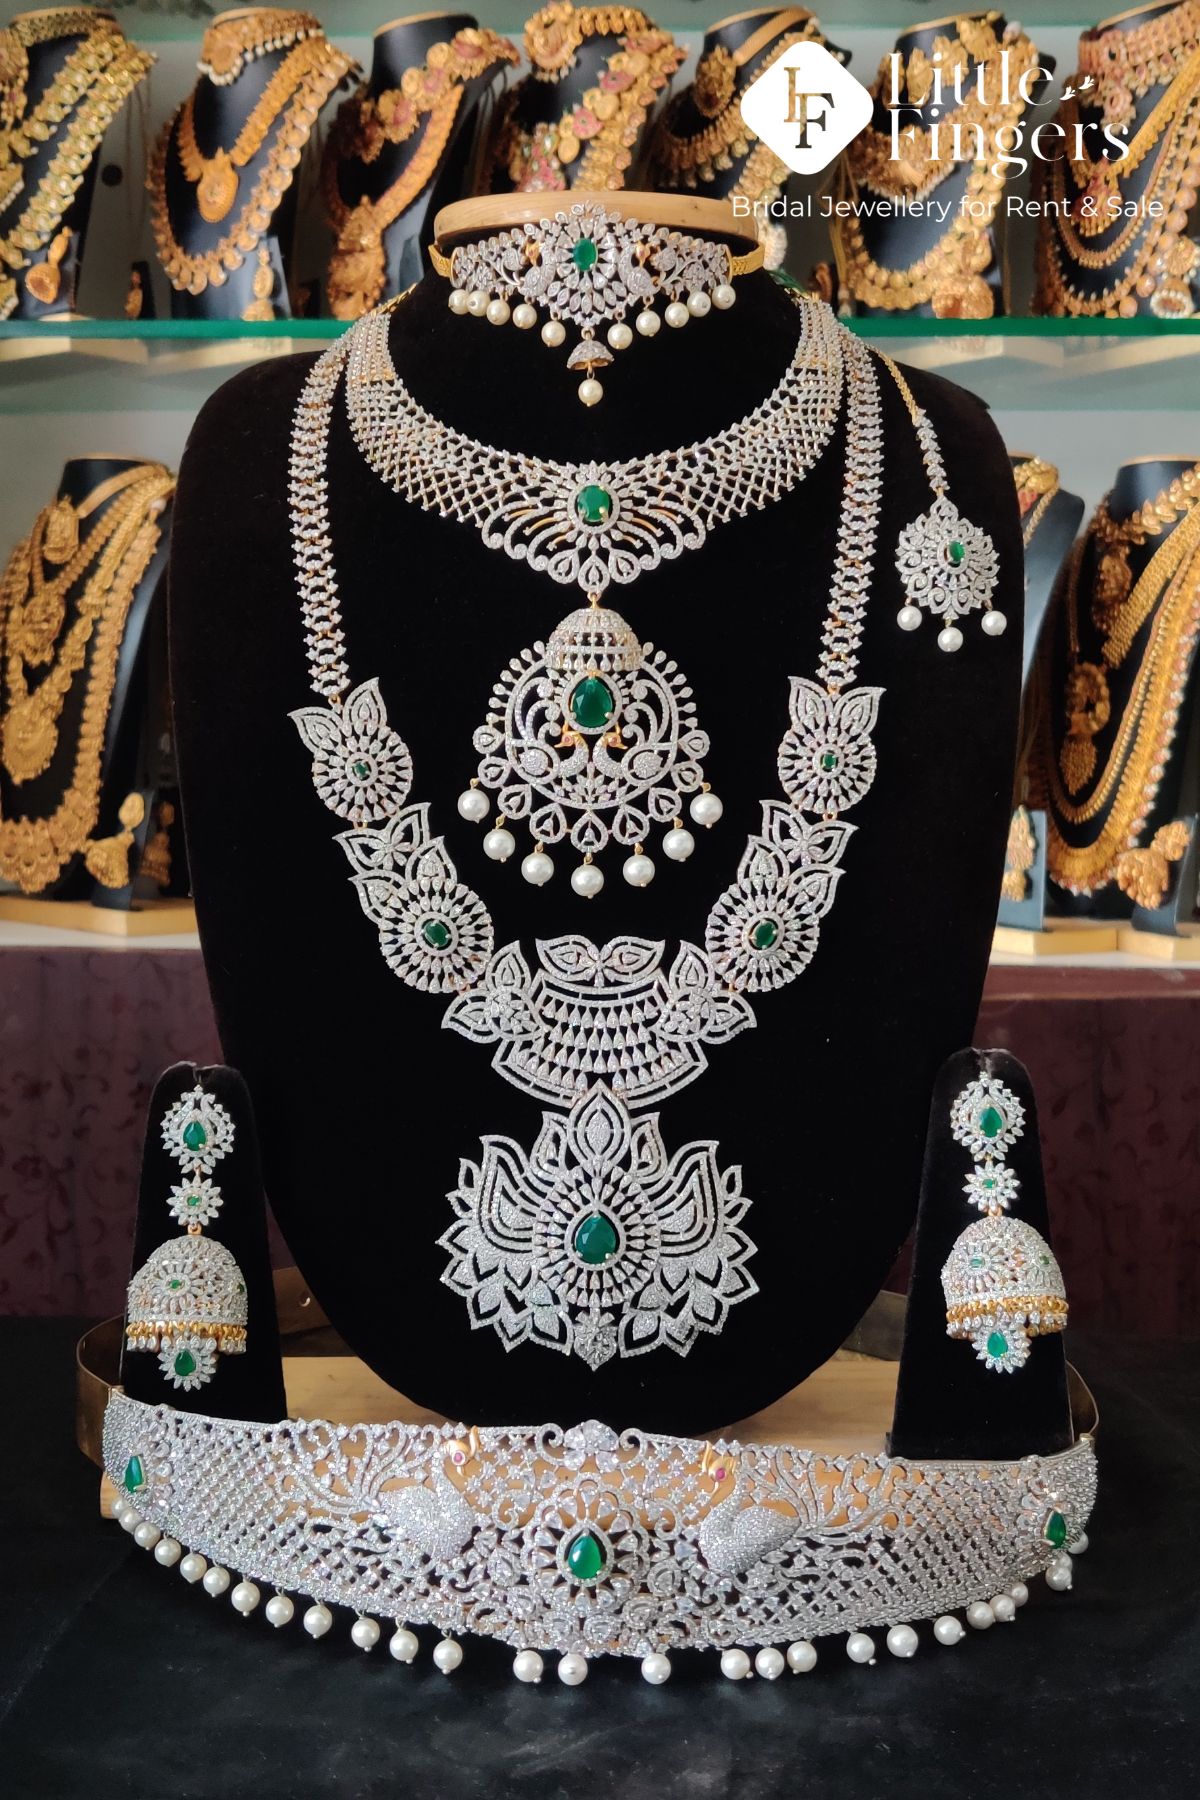 American Diamond Wedding Jewellery for rent online - Little Fingers India